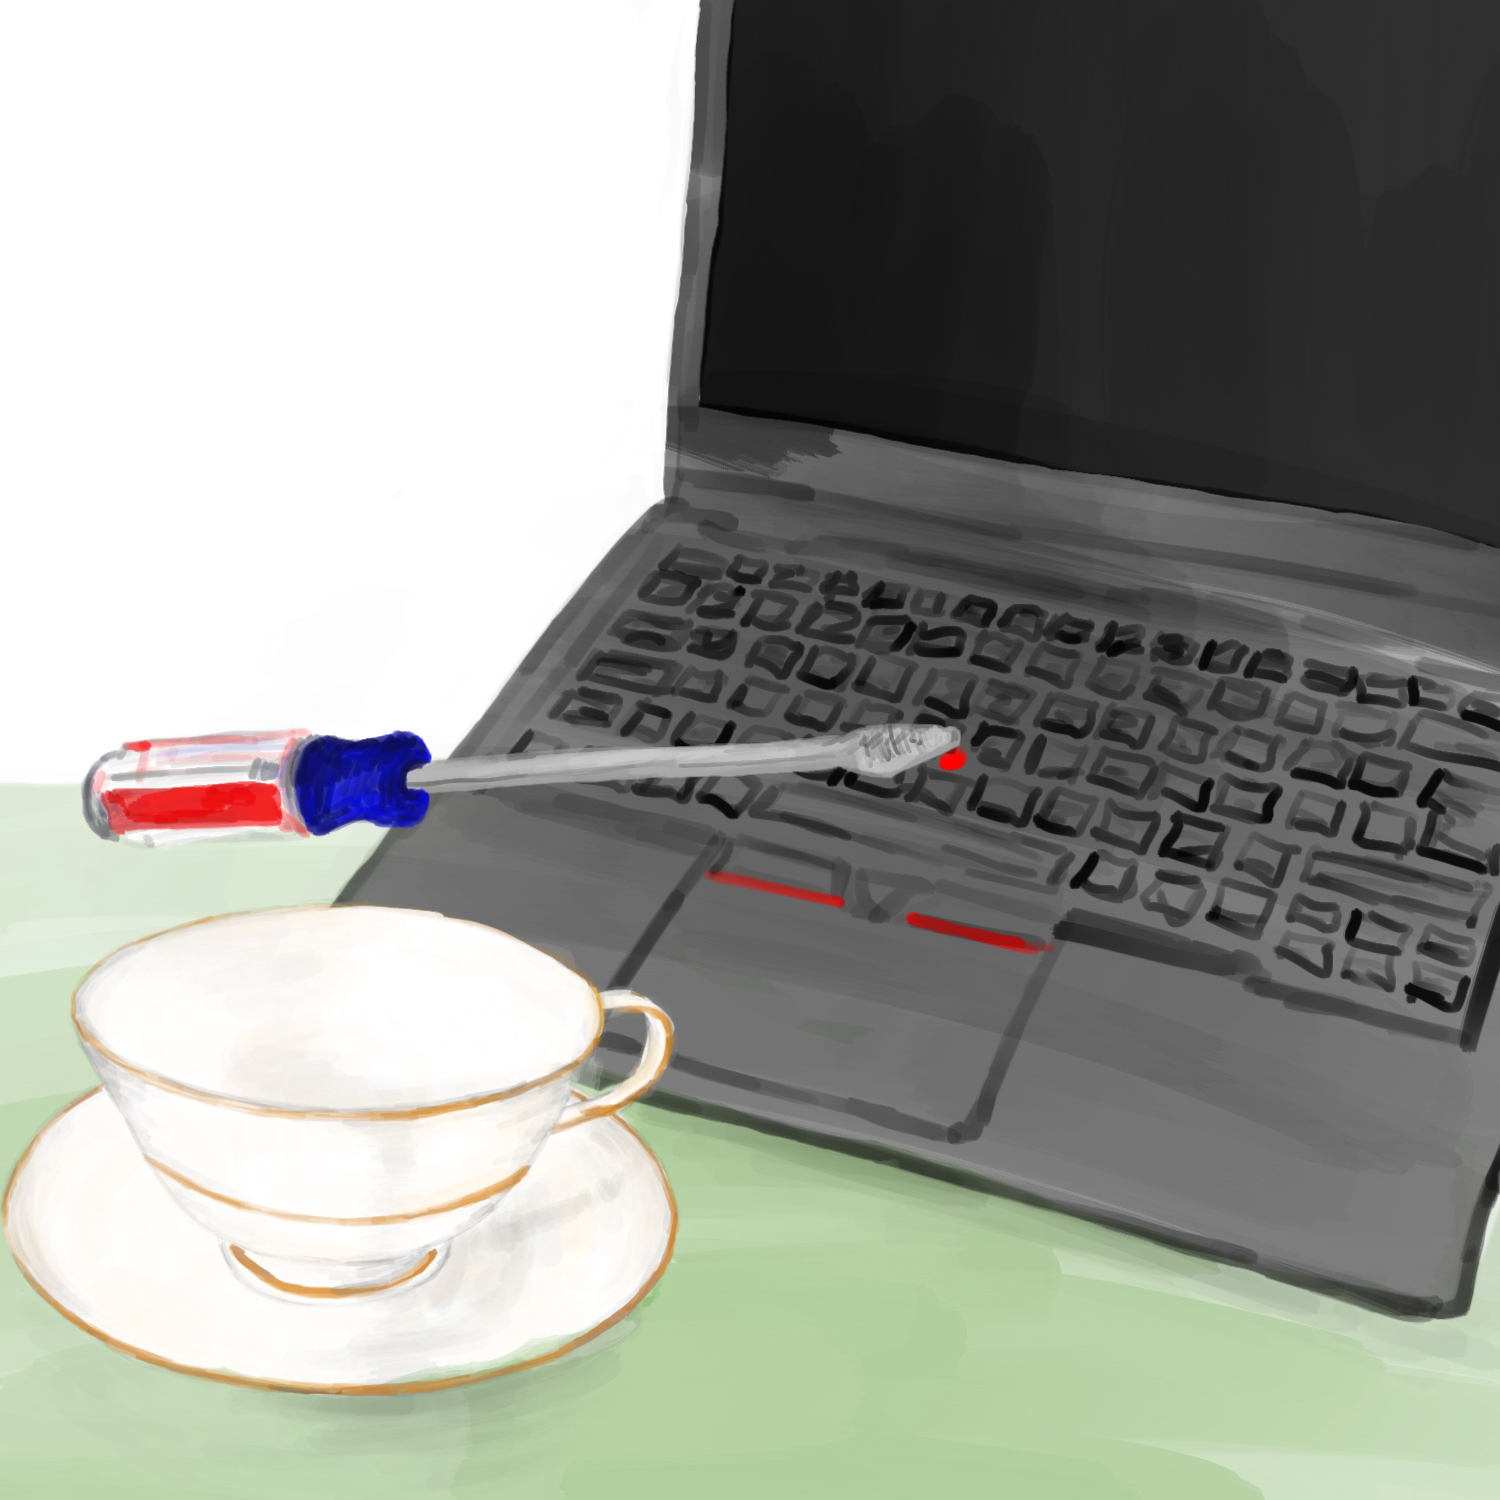 A laptop, a screwdriver, and a teacup